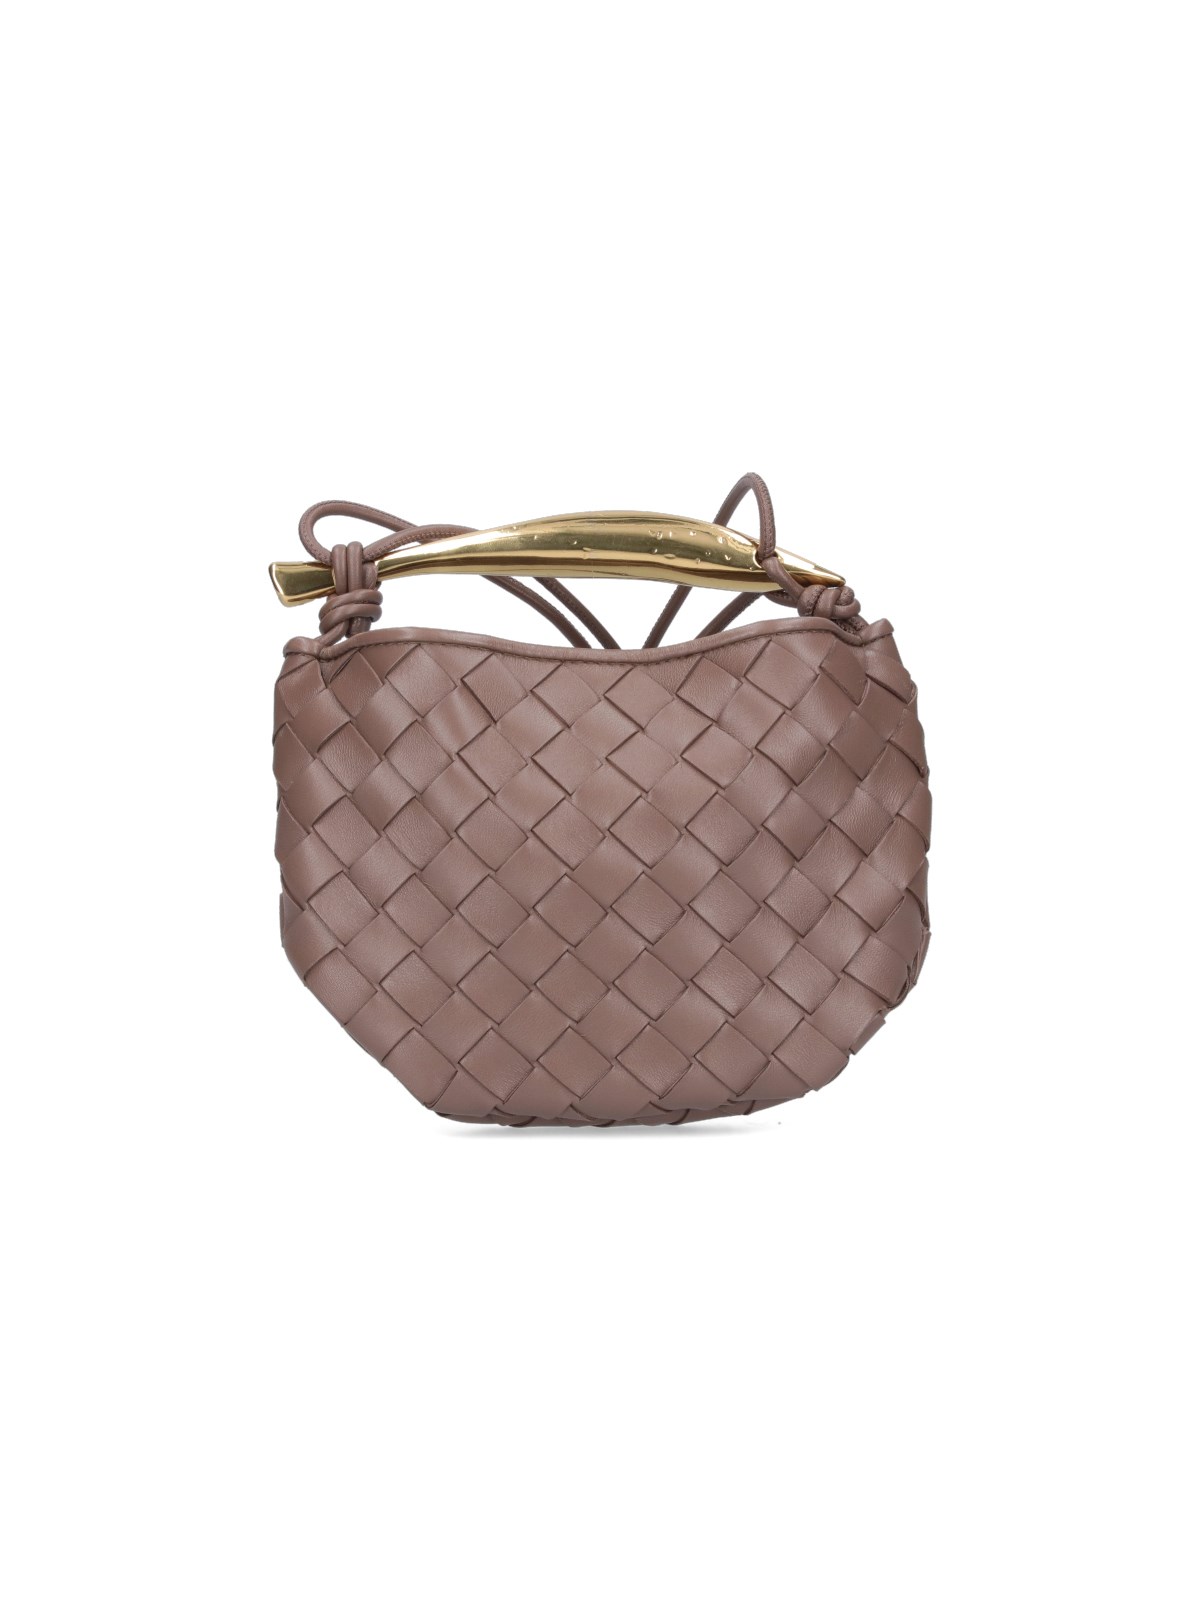 Brown Sardine metal-handle Intrecciato-leather bag, Bottega Veneta